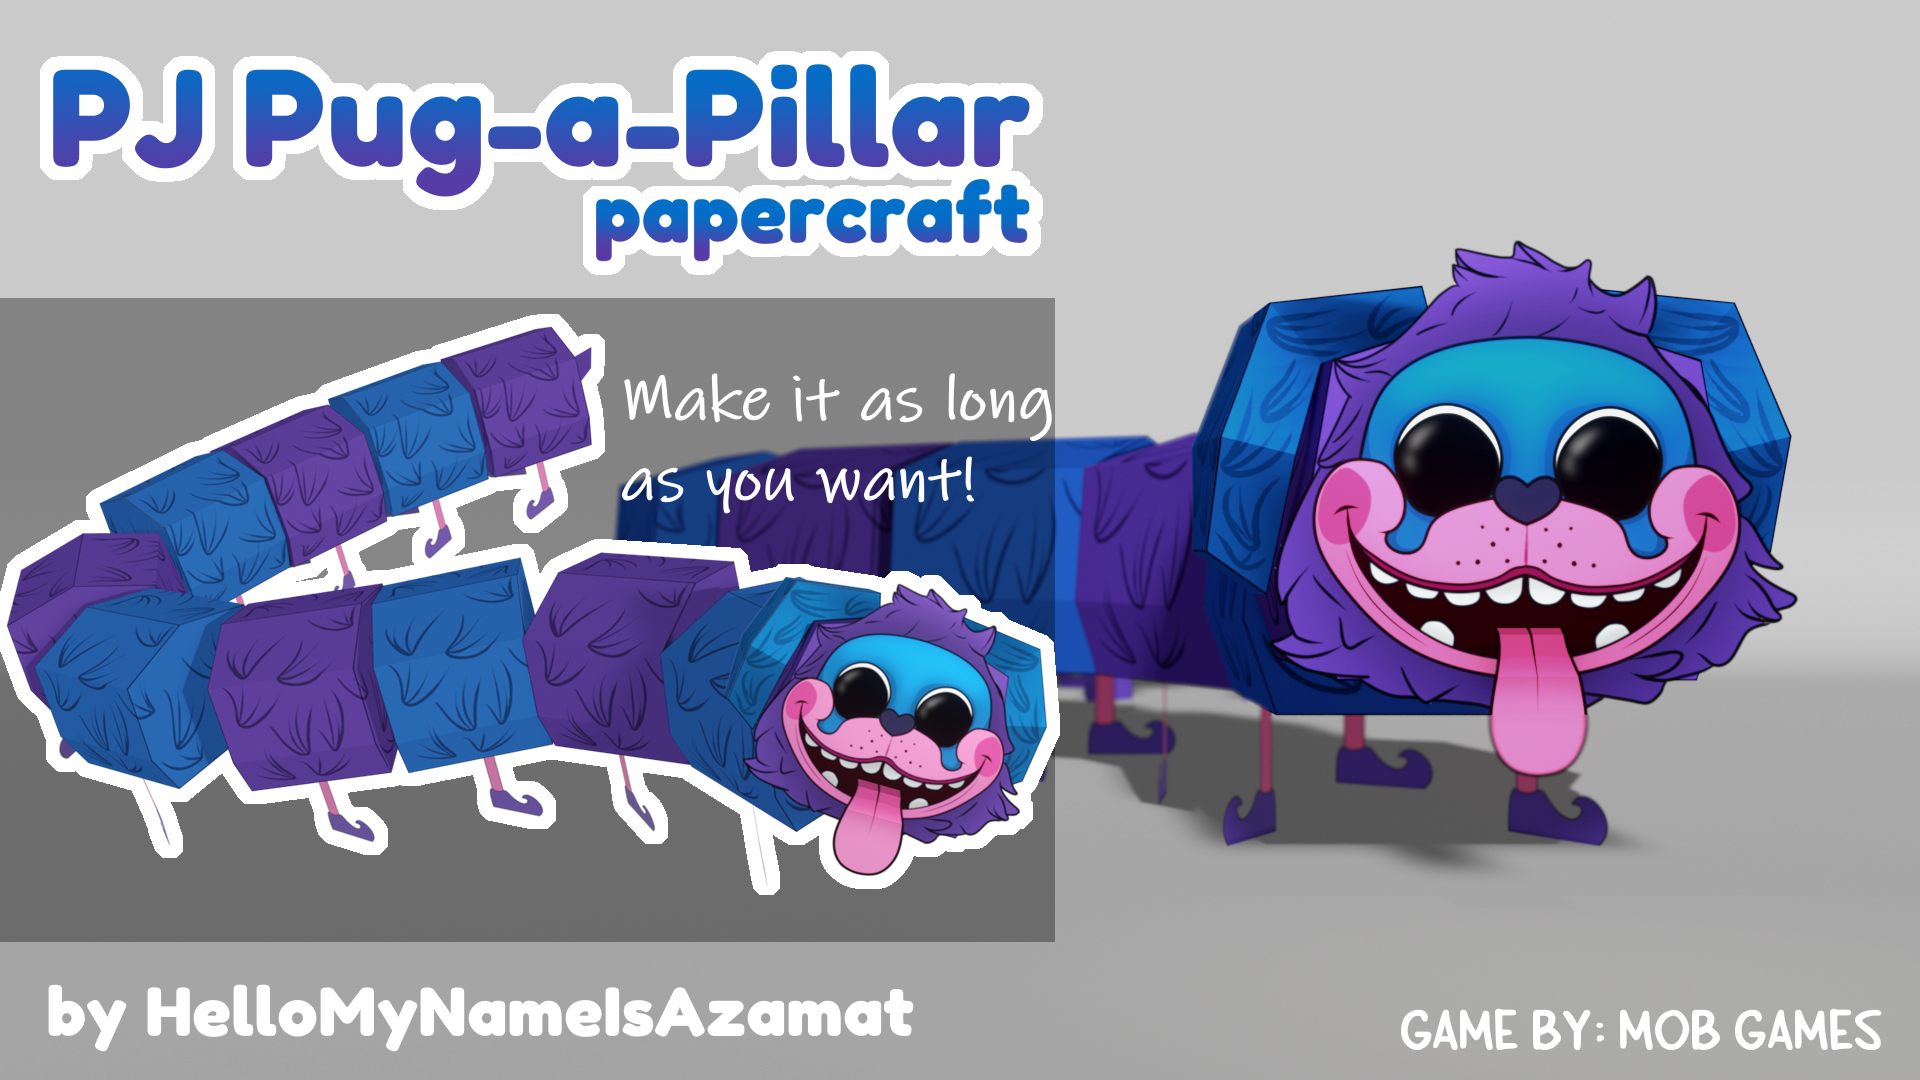 PJ Pug-a-Pillar papercraft by HellomynameisAzamat on DeviantArt